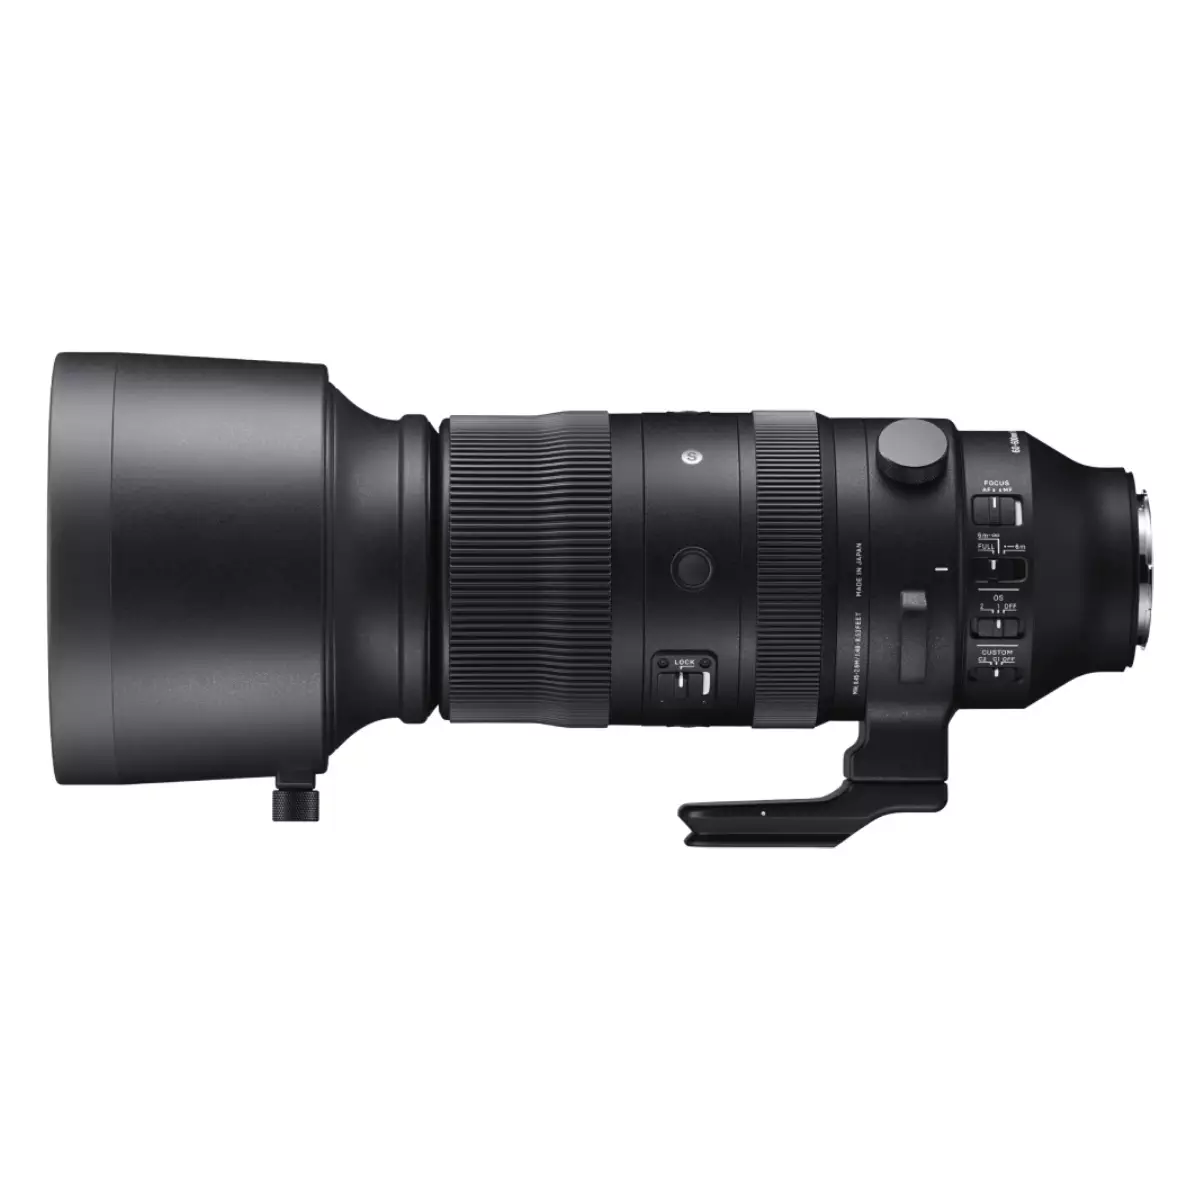 Sigma 60-600mm F4.5-6.3 (S) DG DN OS Lens